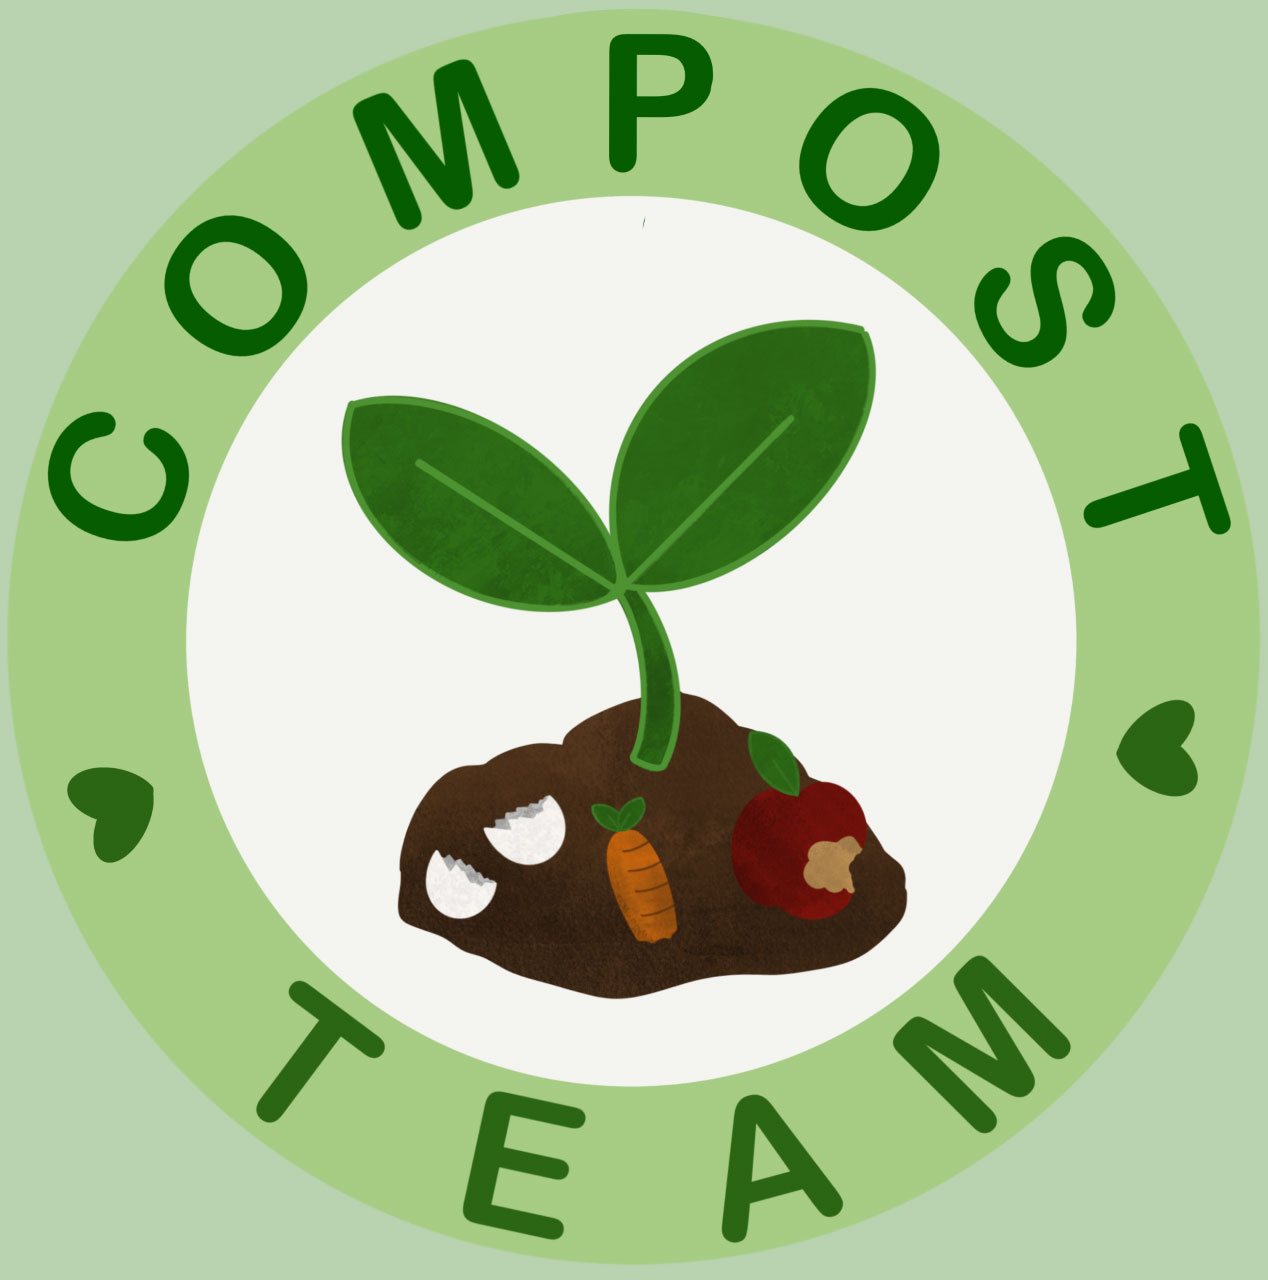 Compost Team